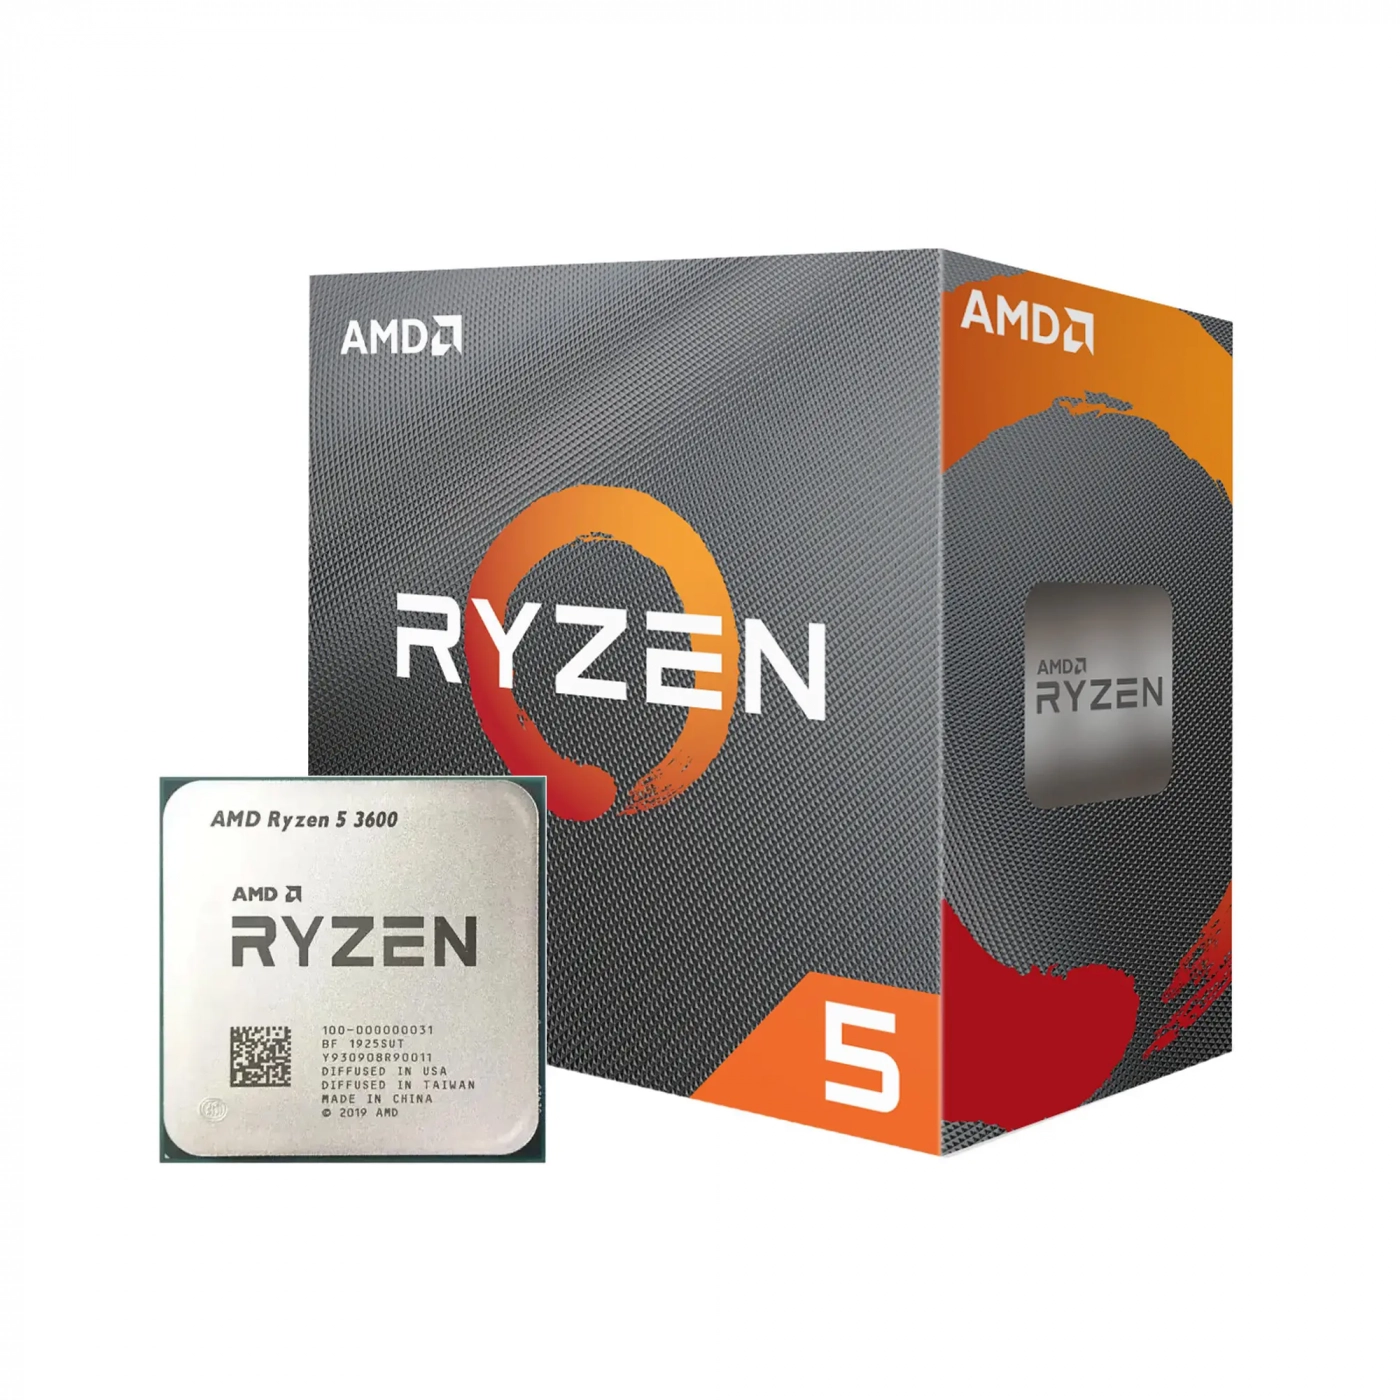 Купить Процессор AMD Ryzen 5 3600 (4.2GHz, 6C/12T, 36MB,65W,AM4,Wraith Stealth cooler) BOX - фото 1